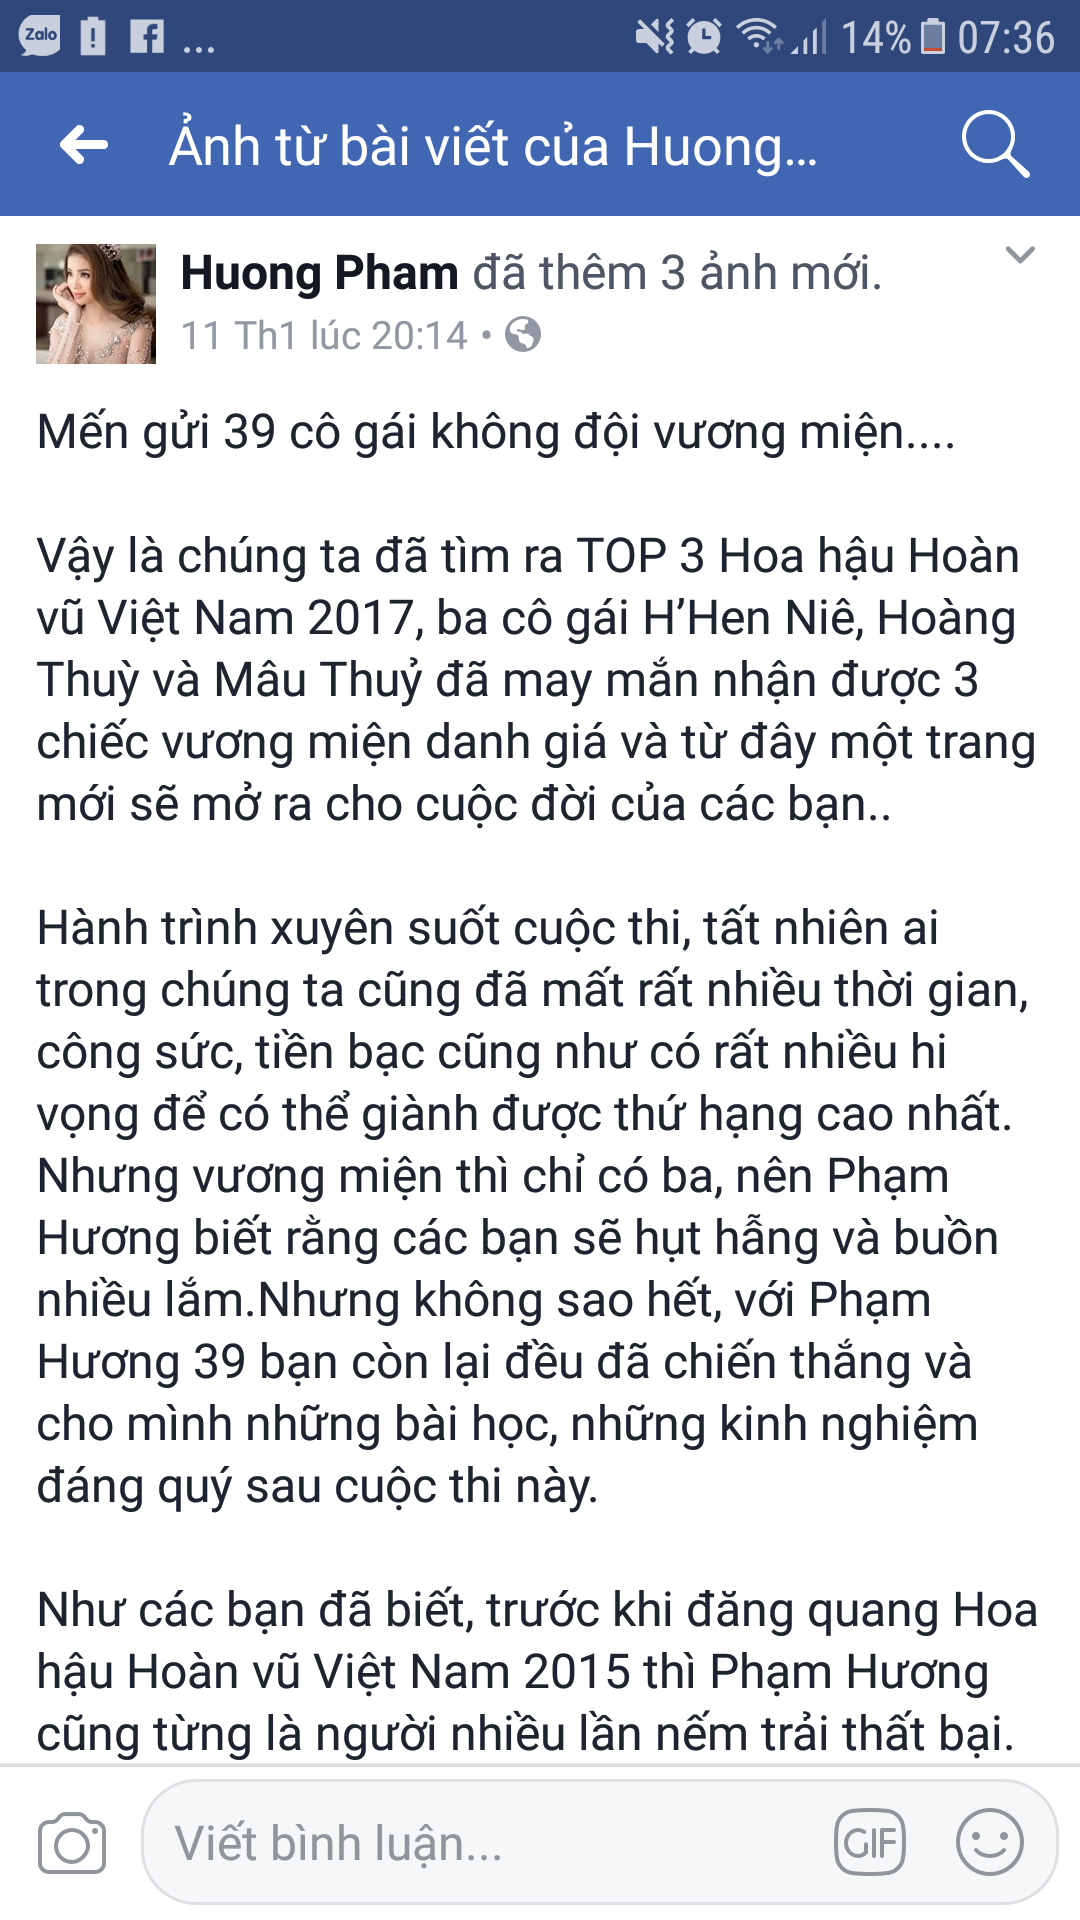 pham-huong-viet-tam-thu-gui-39-co-gai-vang-hhhv-viet-nam-2017